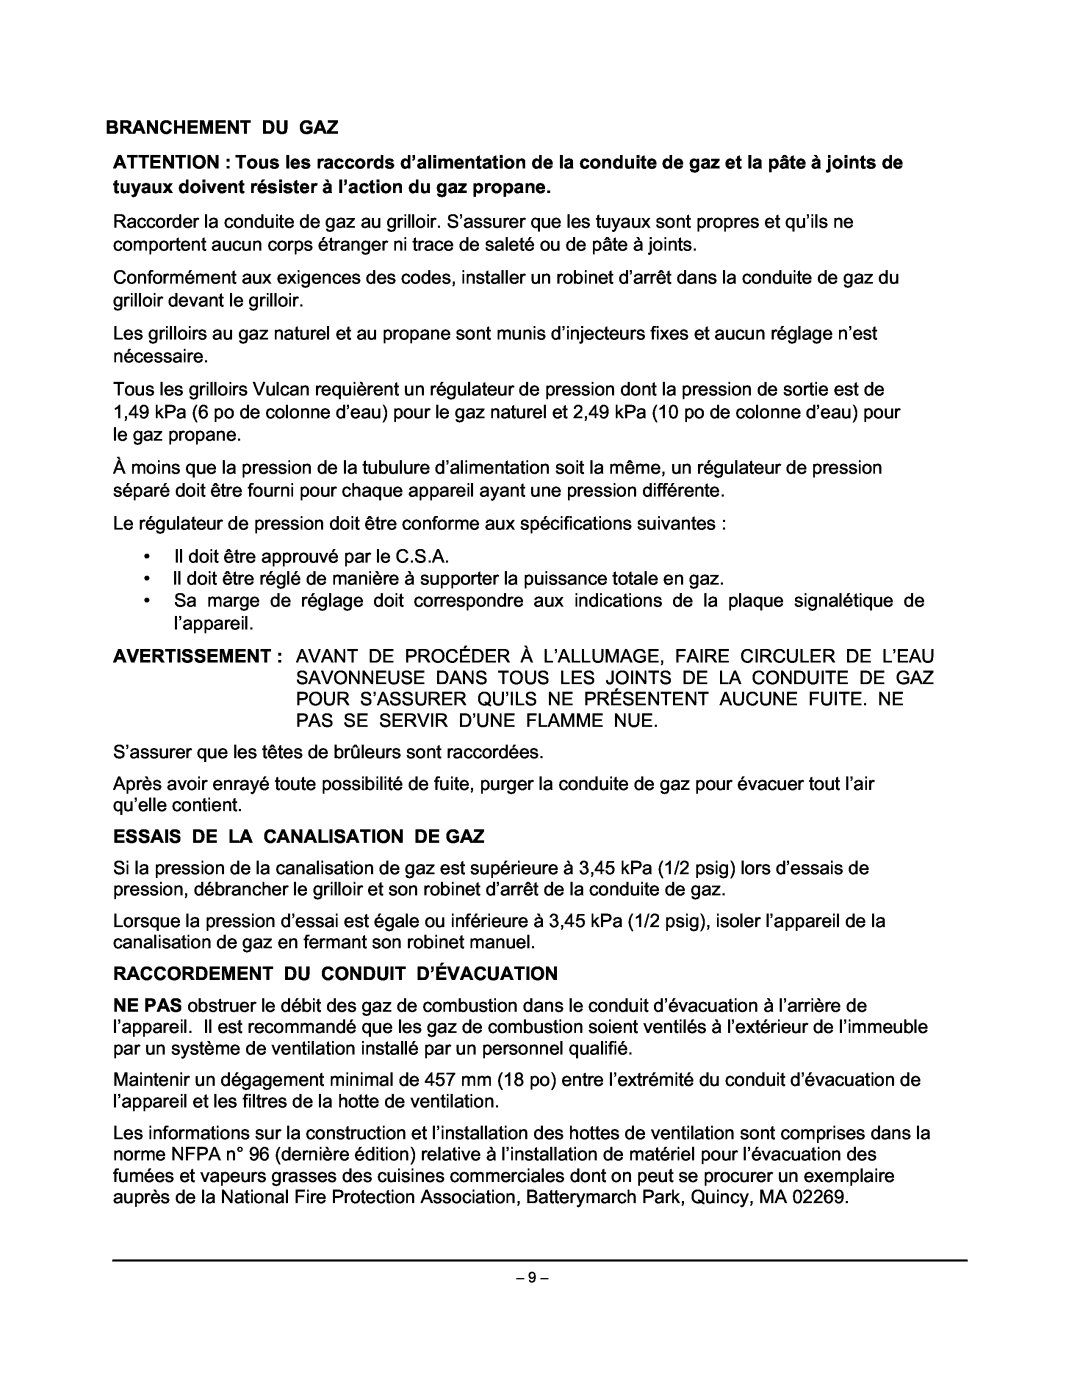 Vulcan-Hart VIR1BF, VIR1CF manual Branchement Du Gaz, Essais De La Canalisation De Gaz, Raccordement Du Conduit D’Évacuation 